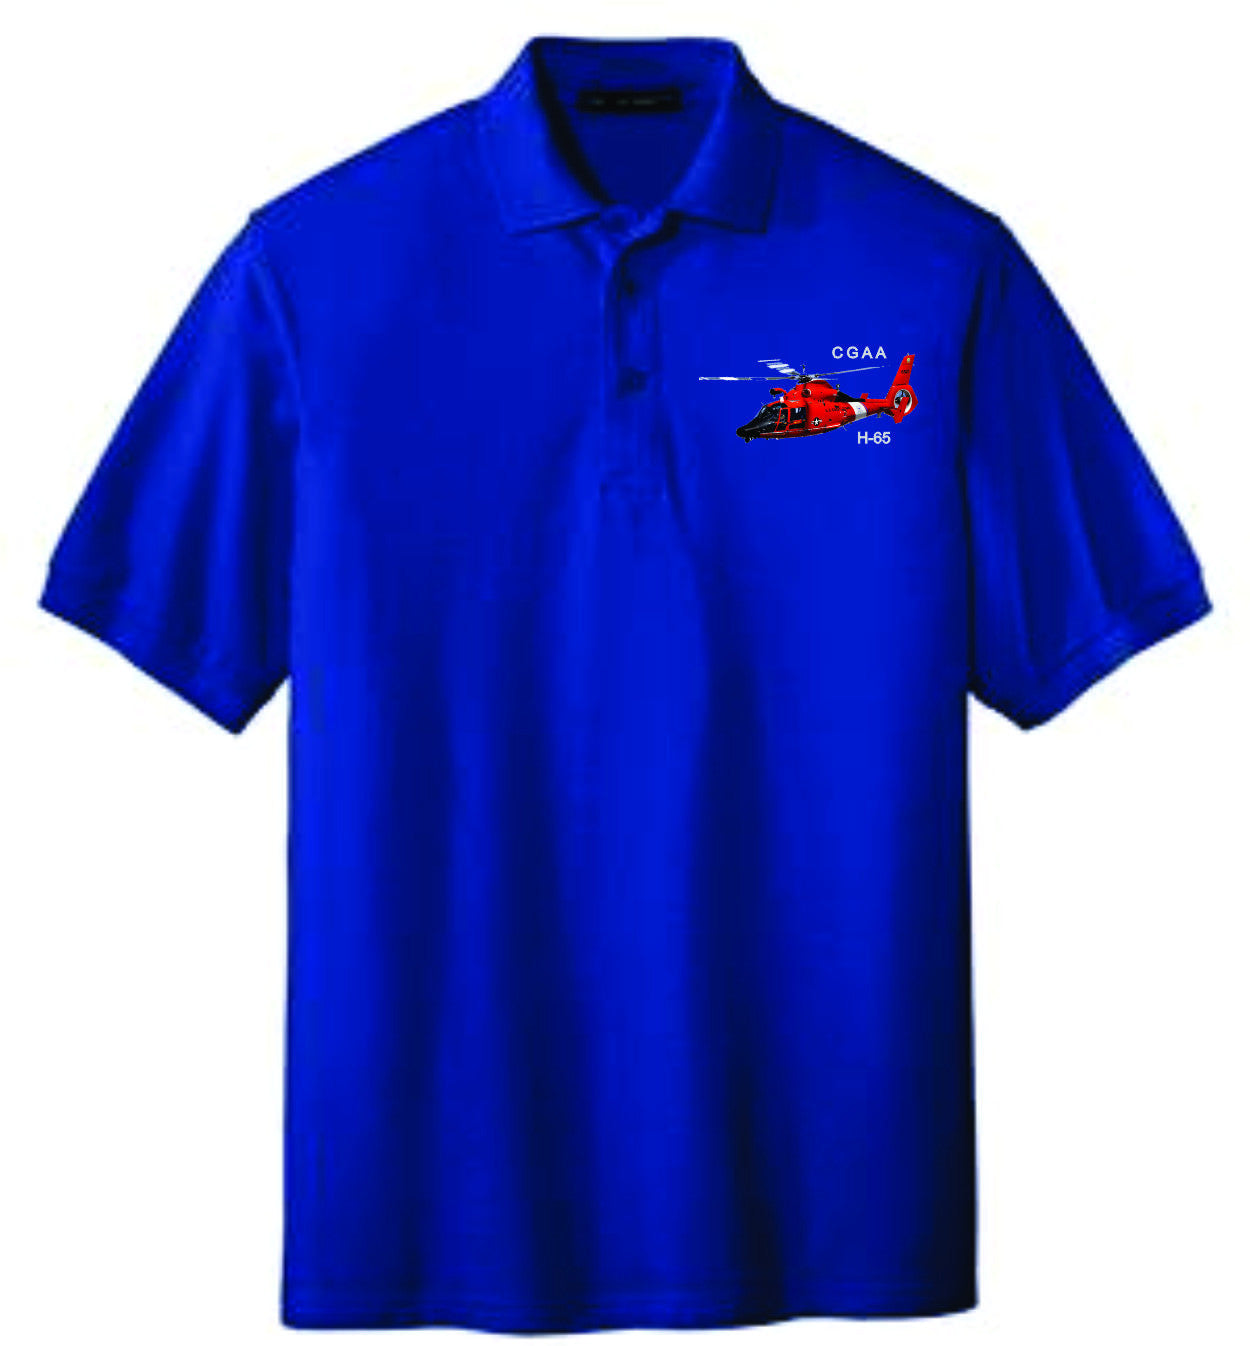 H-65 Wicking Polo Shirt